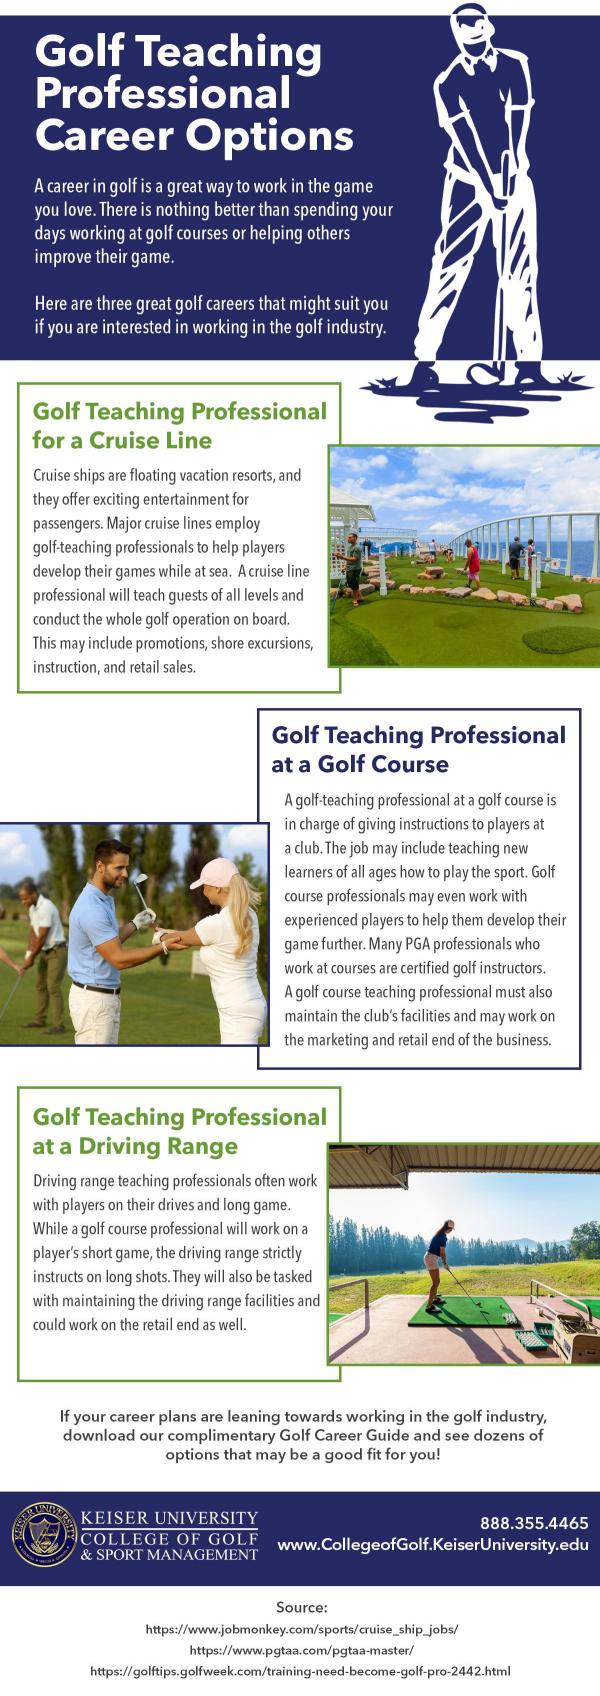 Golf Teaching Professional Career Options Golf Teaching Professional Career Options